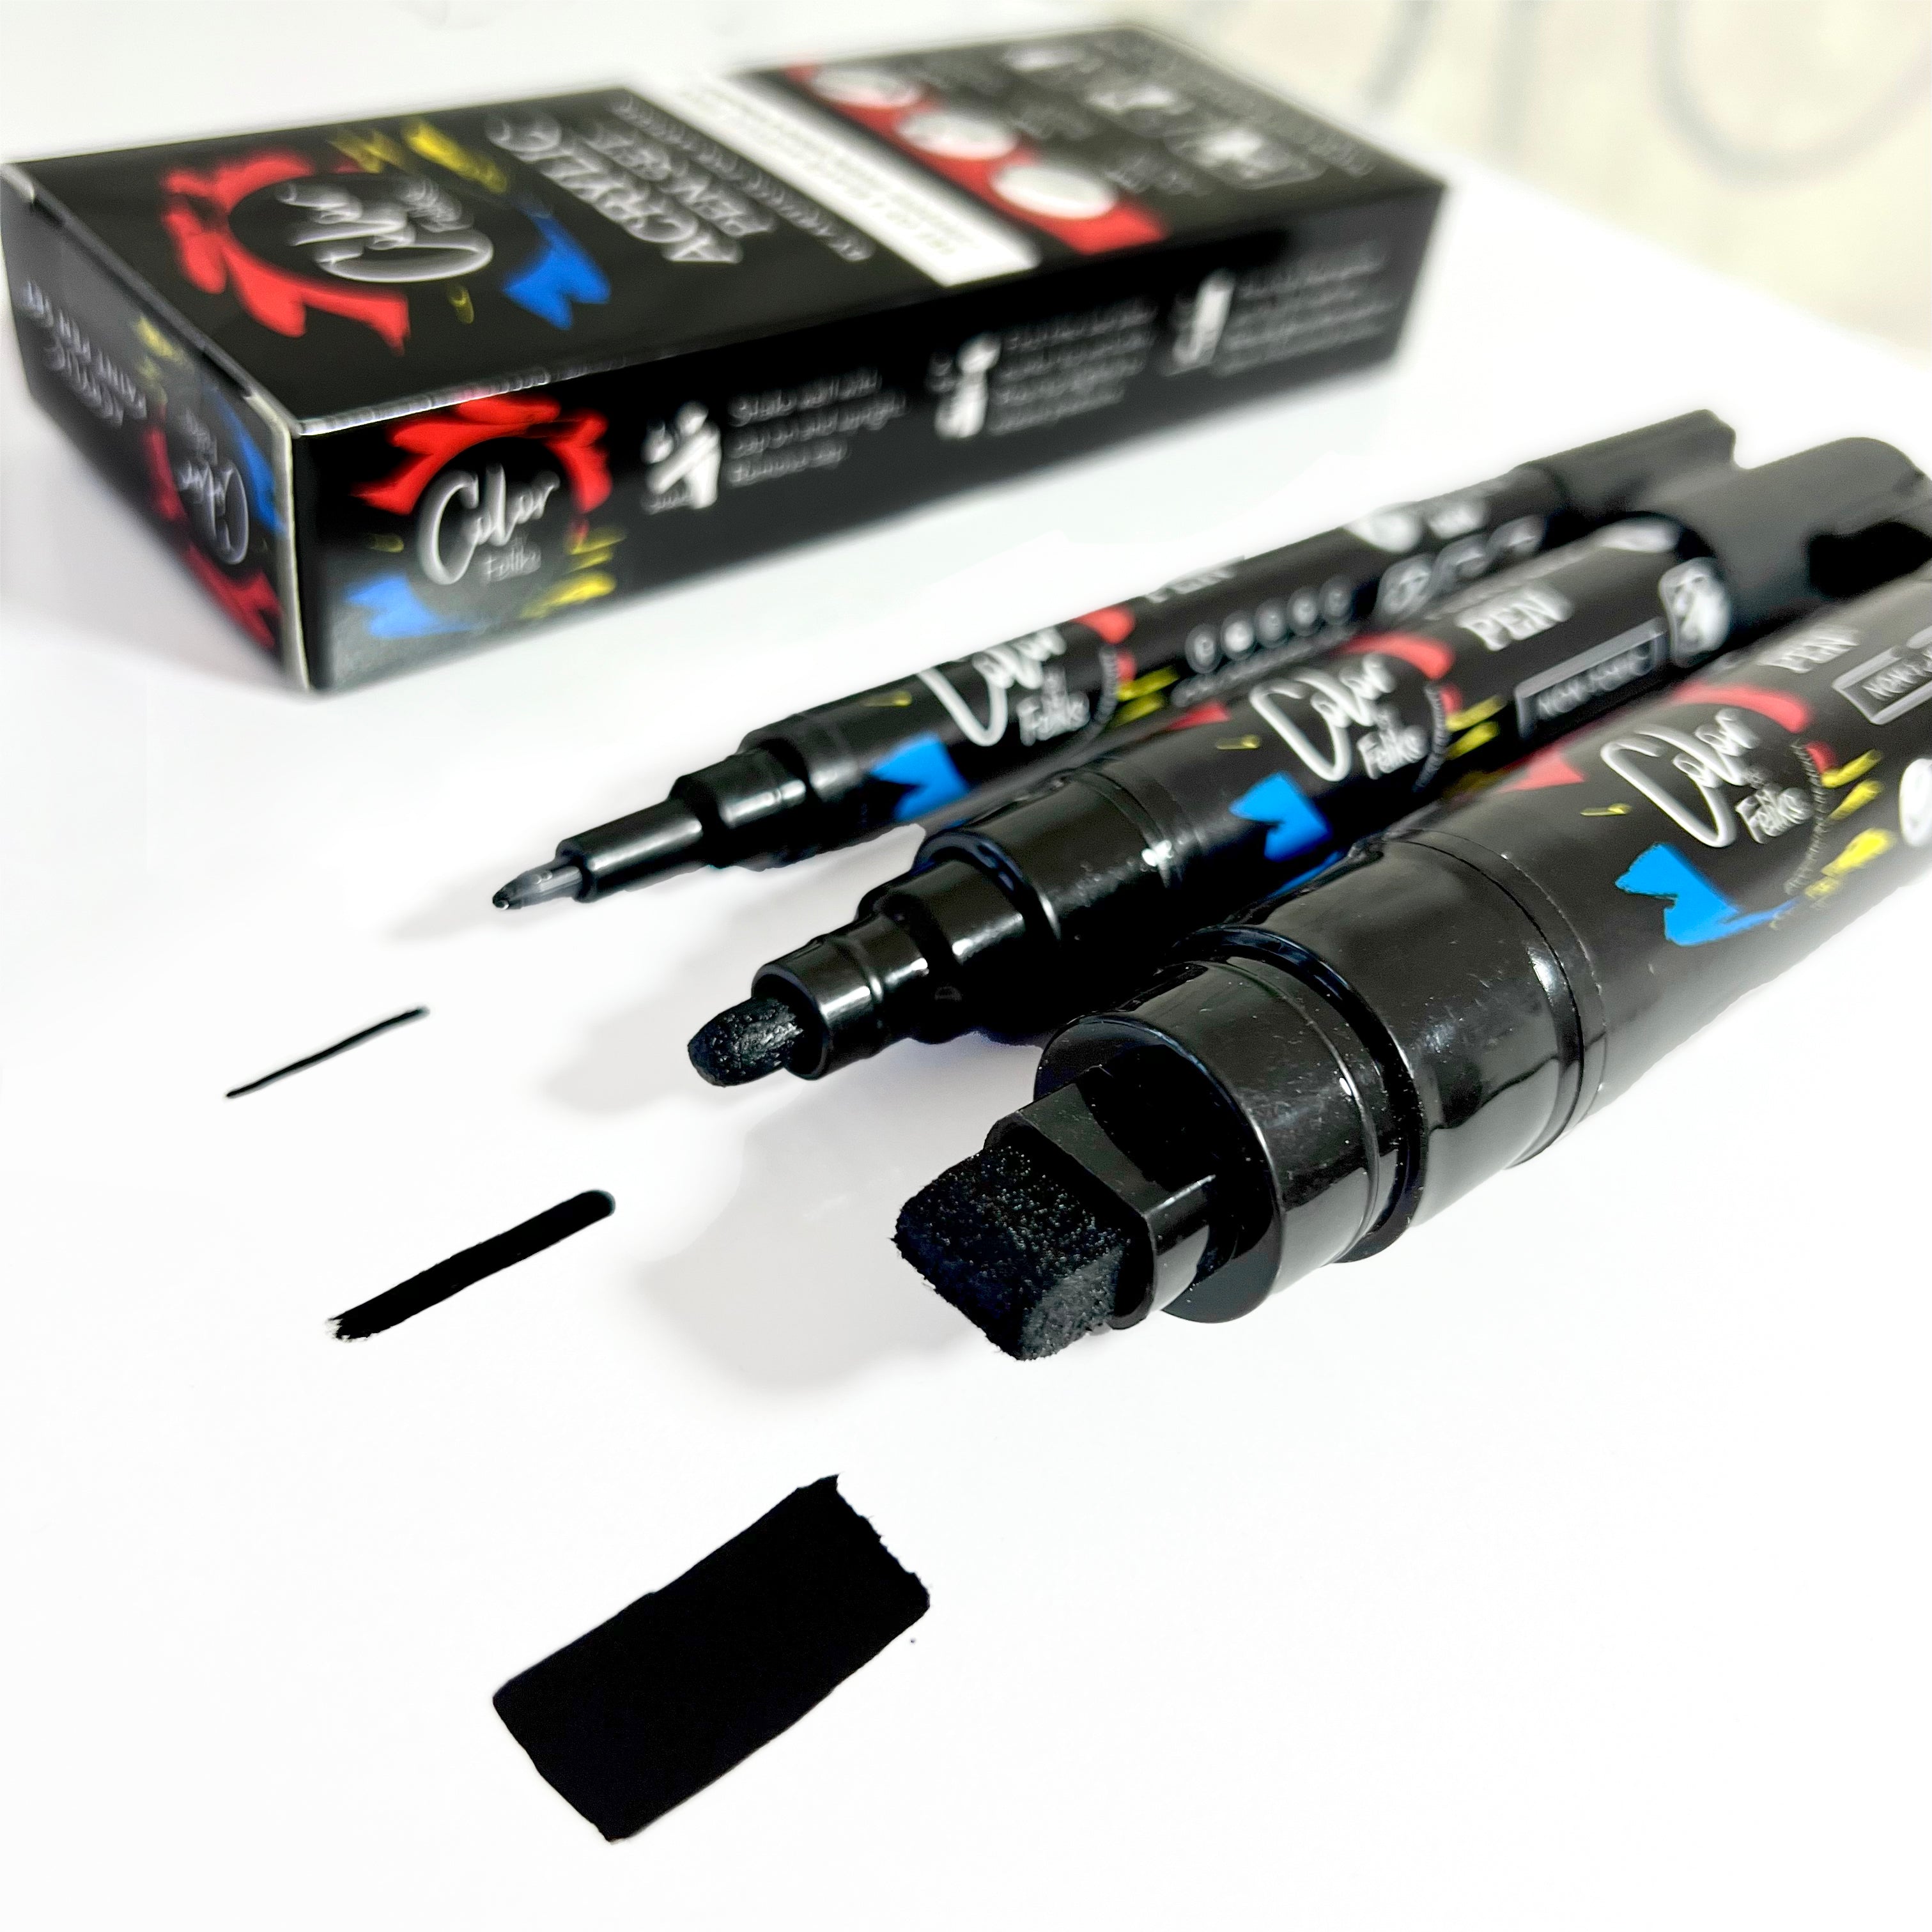 Funcils 5 Acrylic Black Paint Pen - Fine Tip, Thin Point & Jumbo Pens (1mm,  3mm